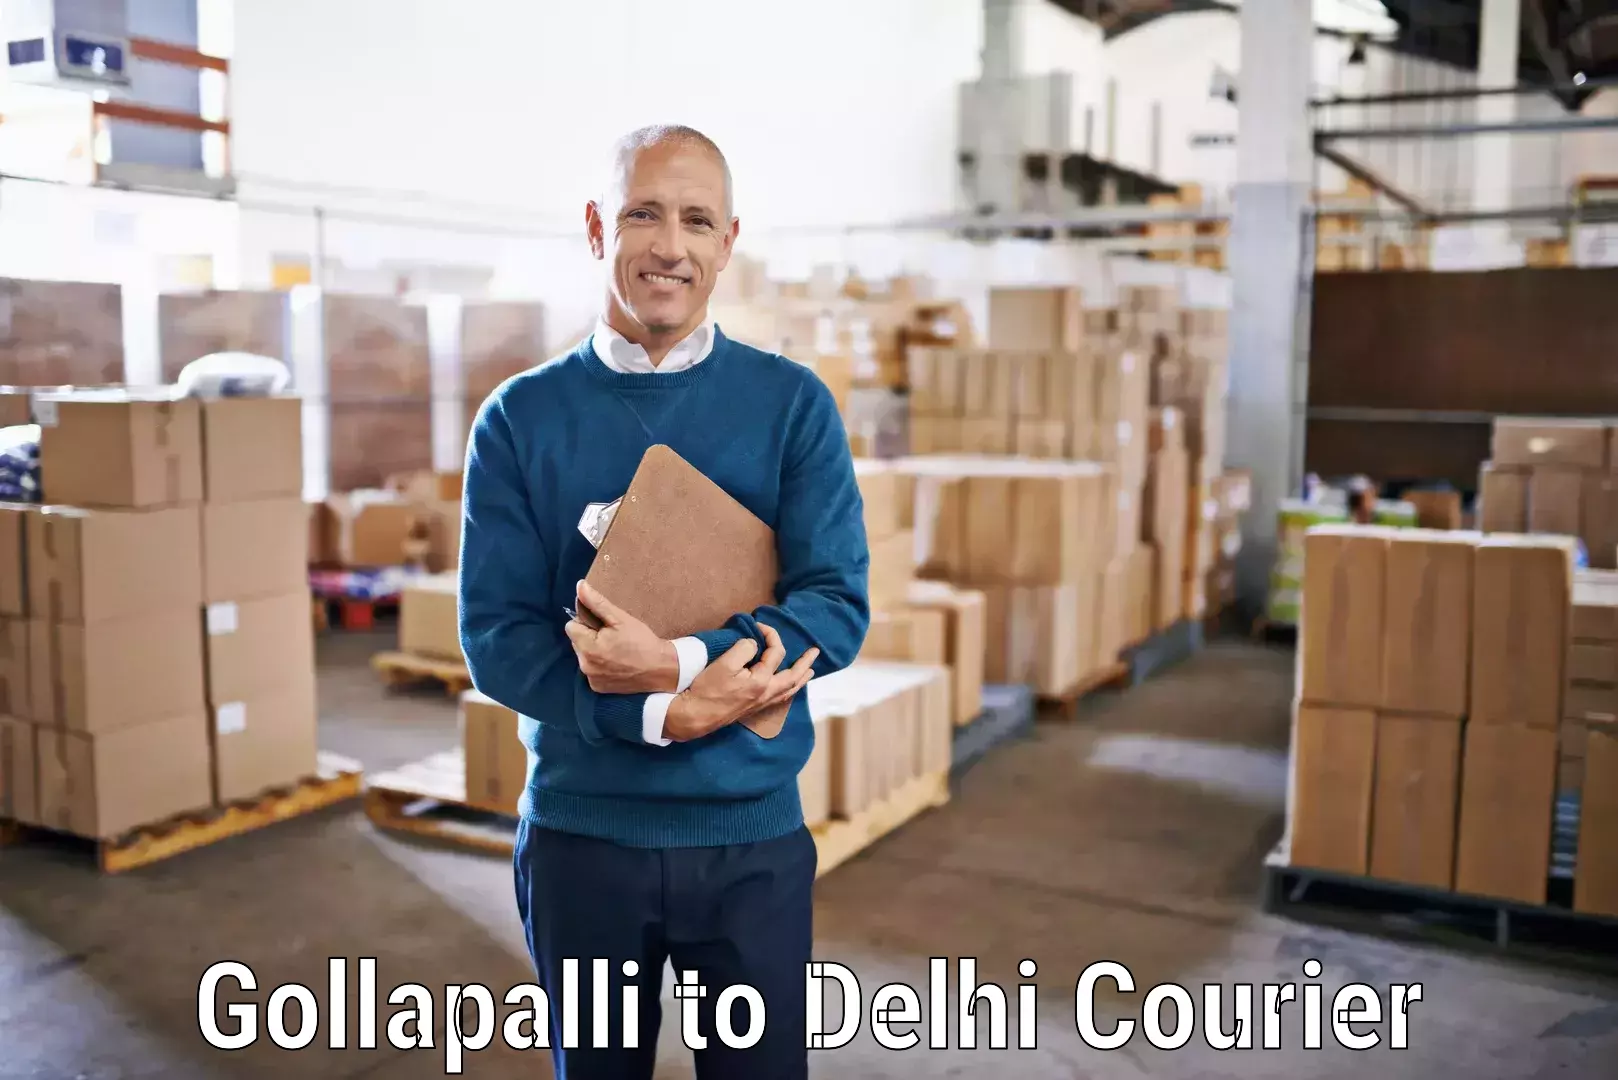 Global courier networks Gollapalli to Jawaharlal Nehru University New Delhi